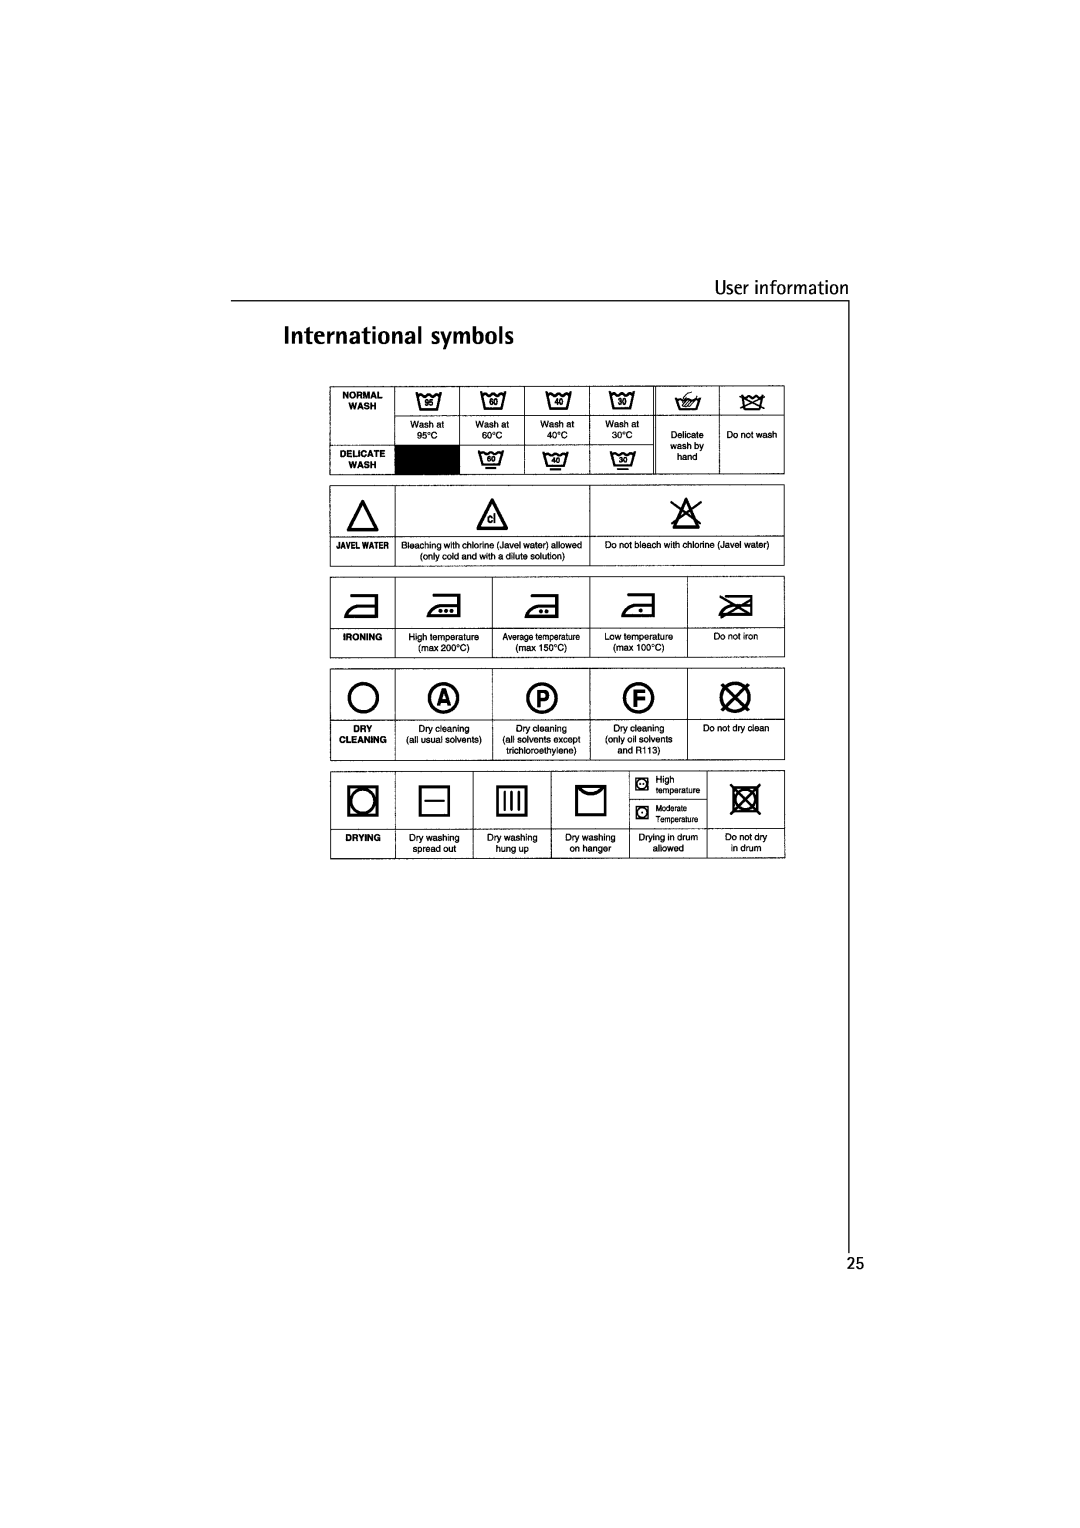 AEG 48380 manual International symbols, User information 